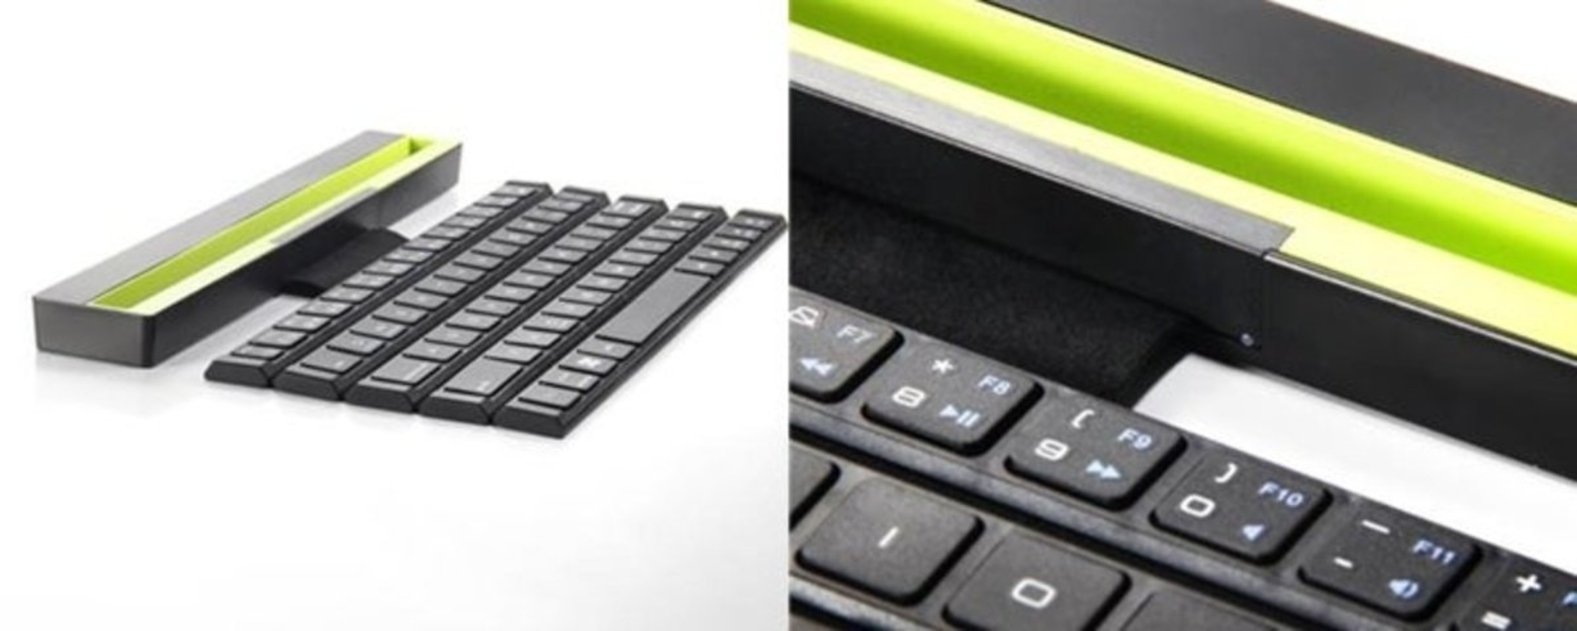 R4 teclado enrollable